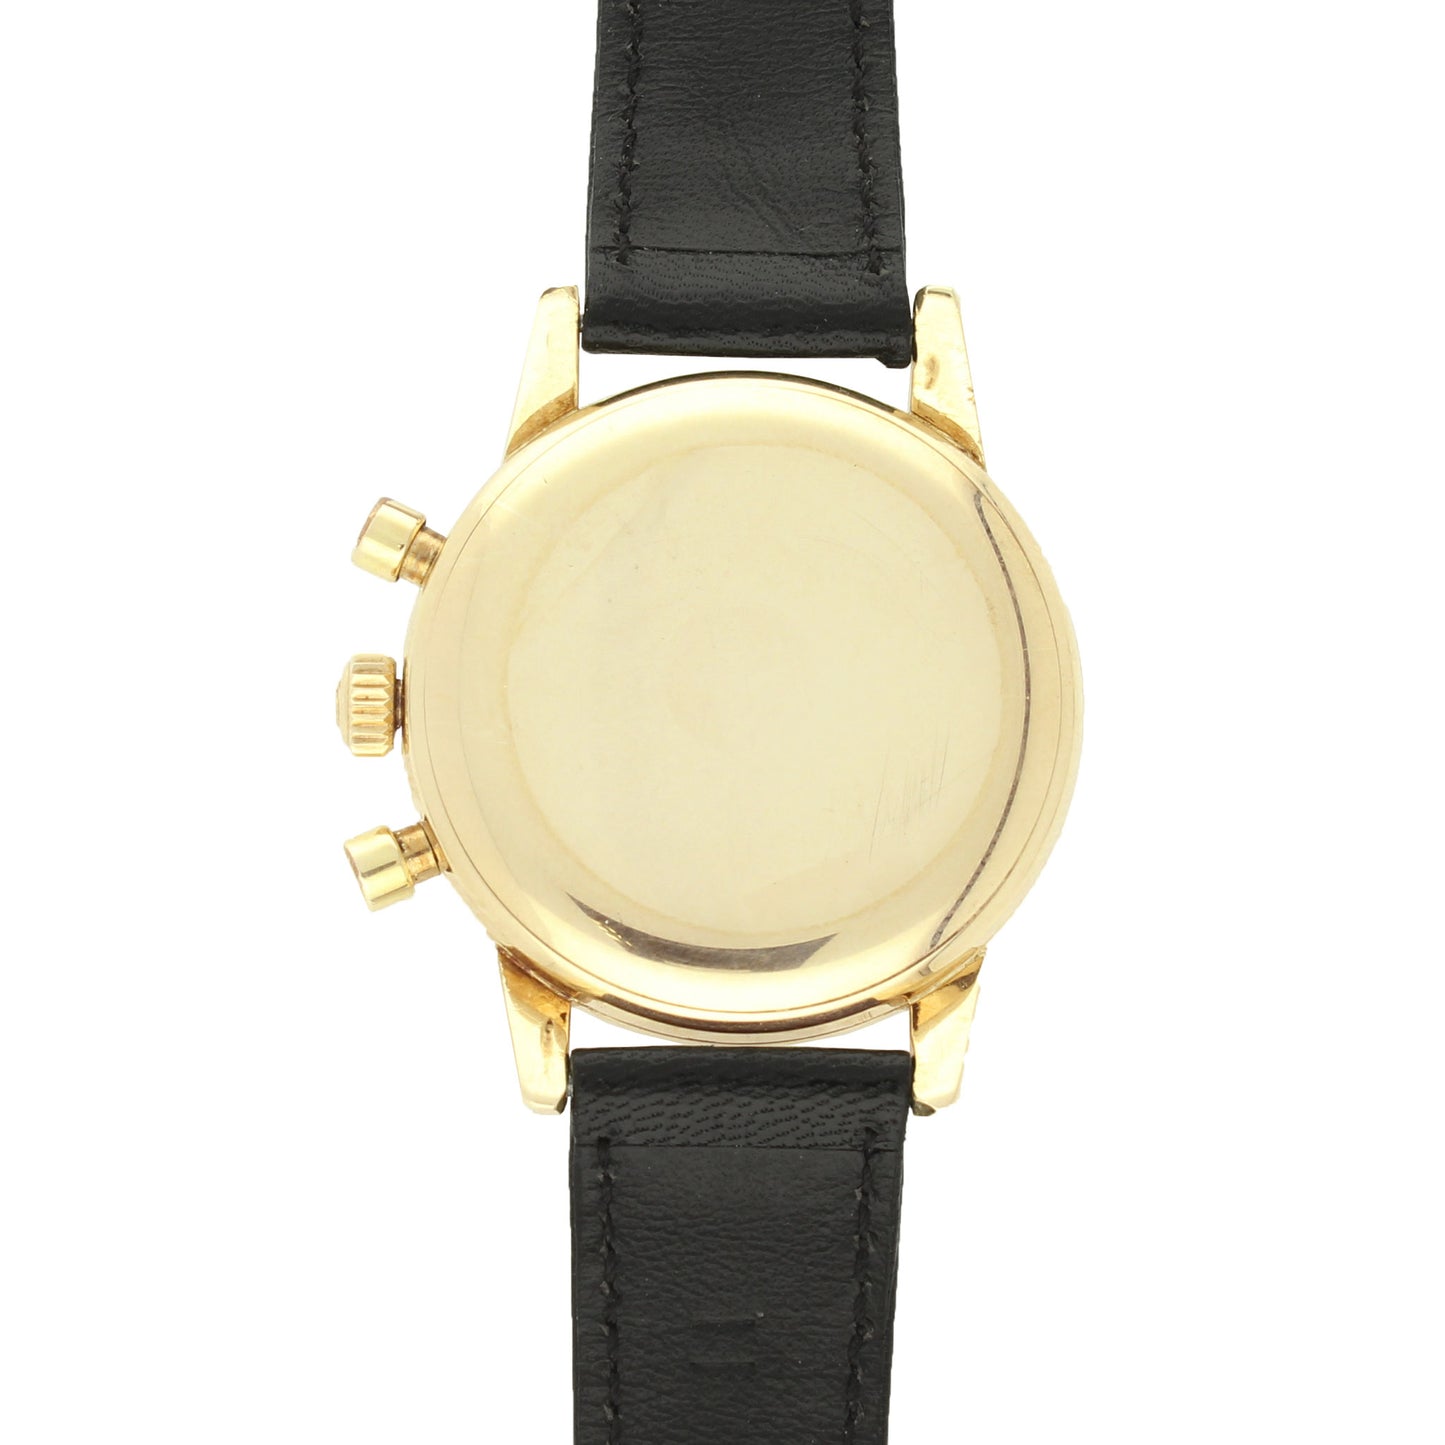 14ct yellow gold OMEGA Seamaster chronograph wristwatch. Made 1957